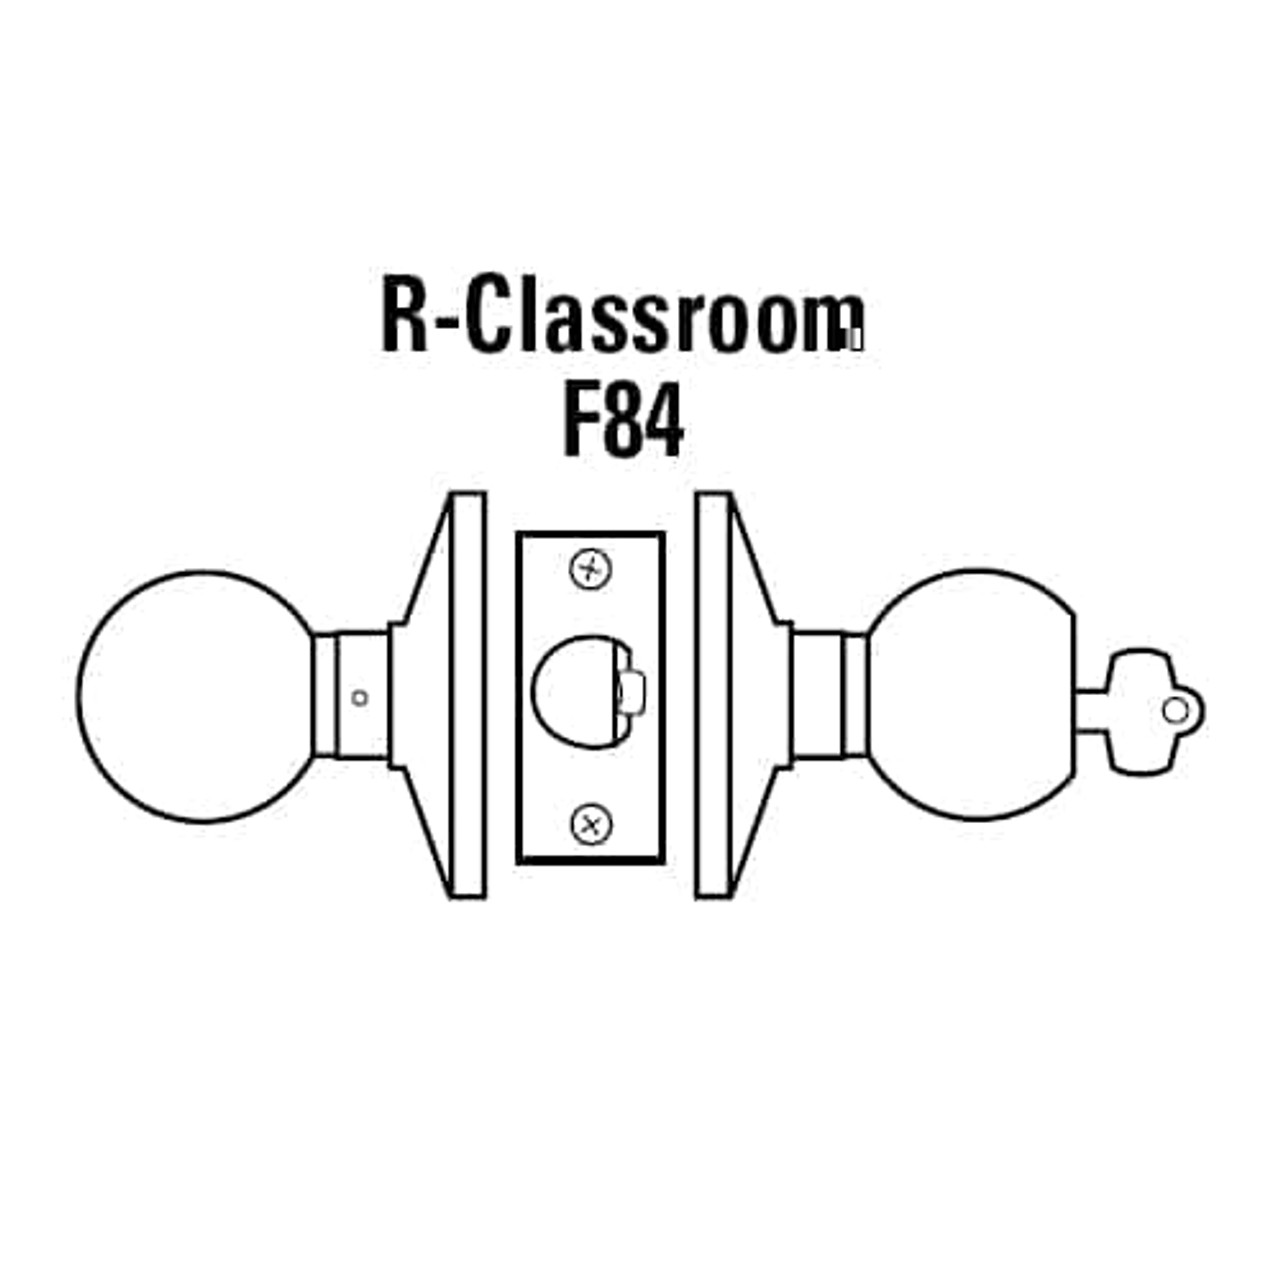 6K27R4CSTK626 Best 6K Series Medium Duty Classroom Cylindrical Knob Locks with Round Style in Satin Chrome